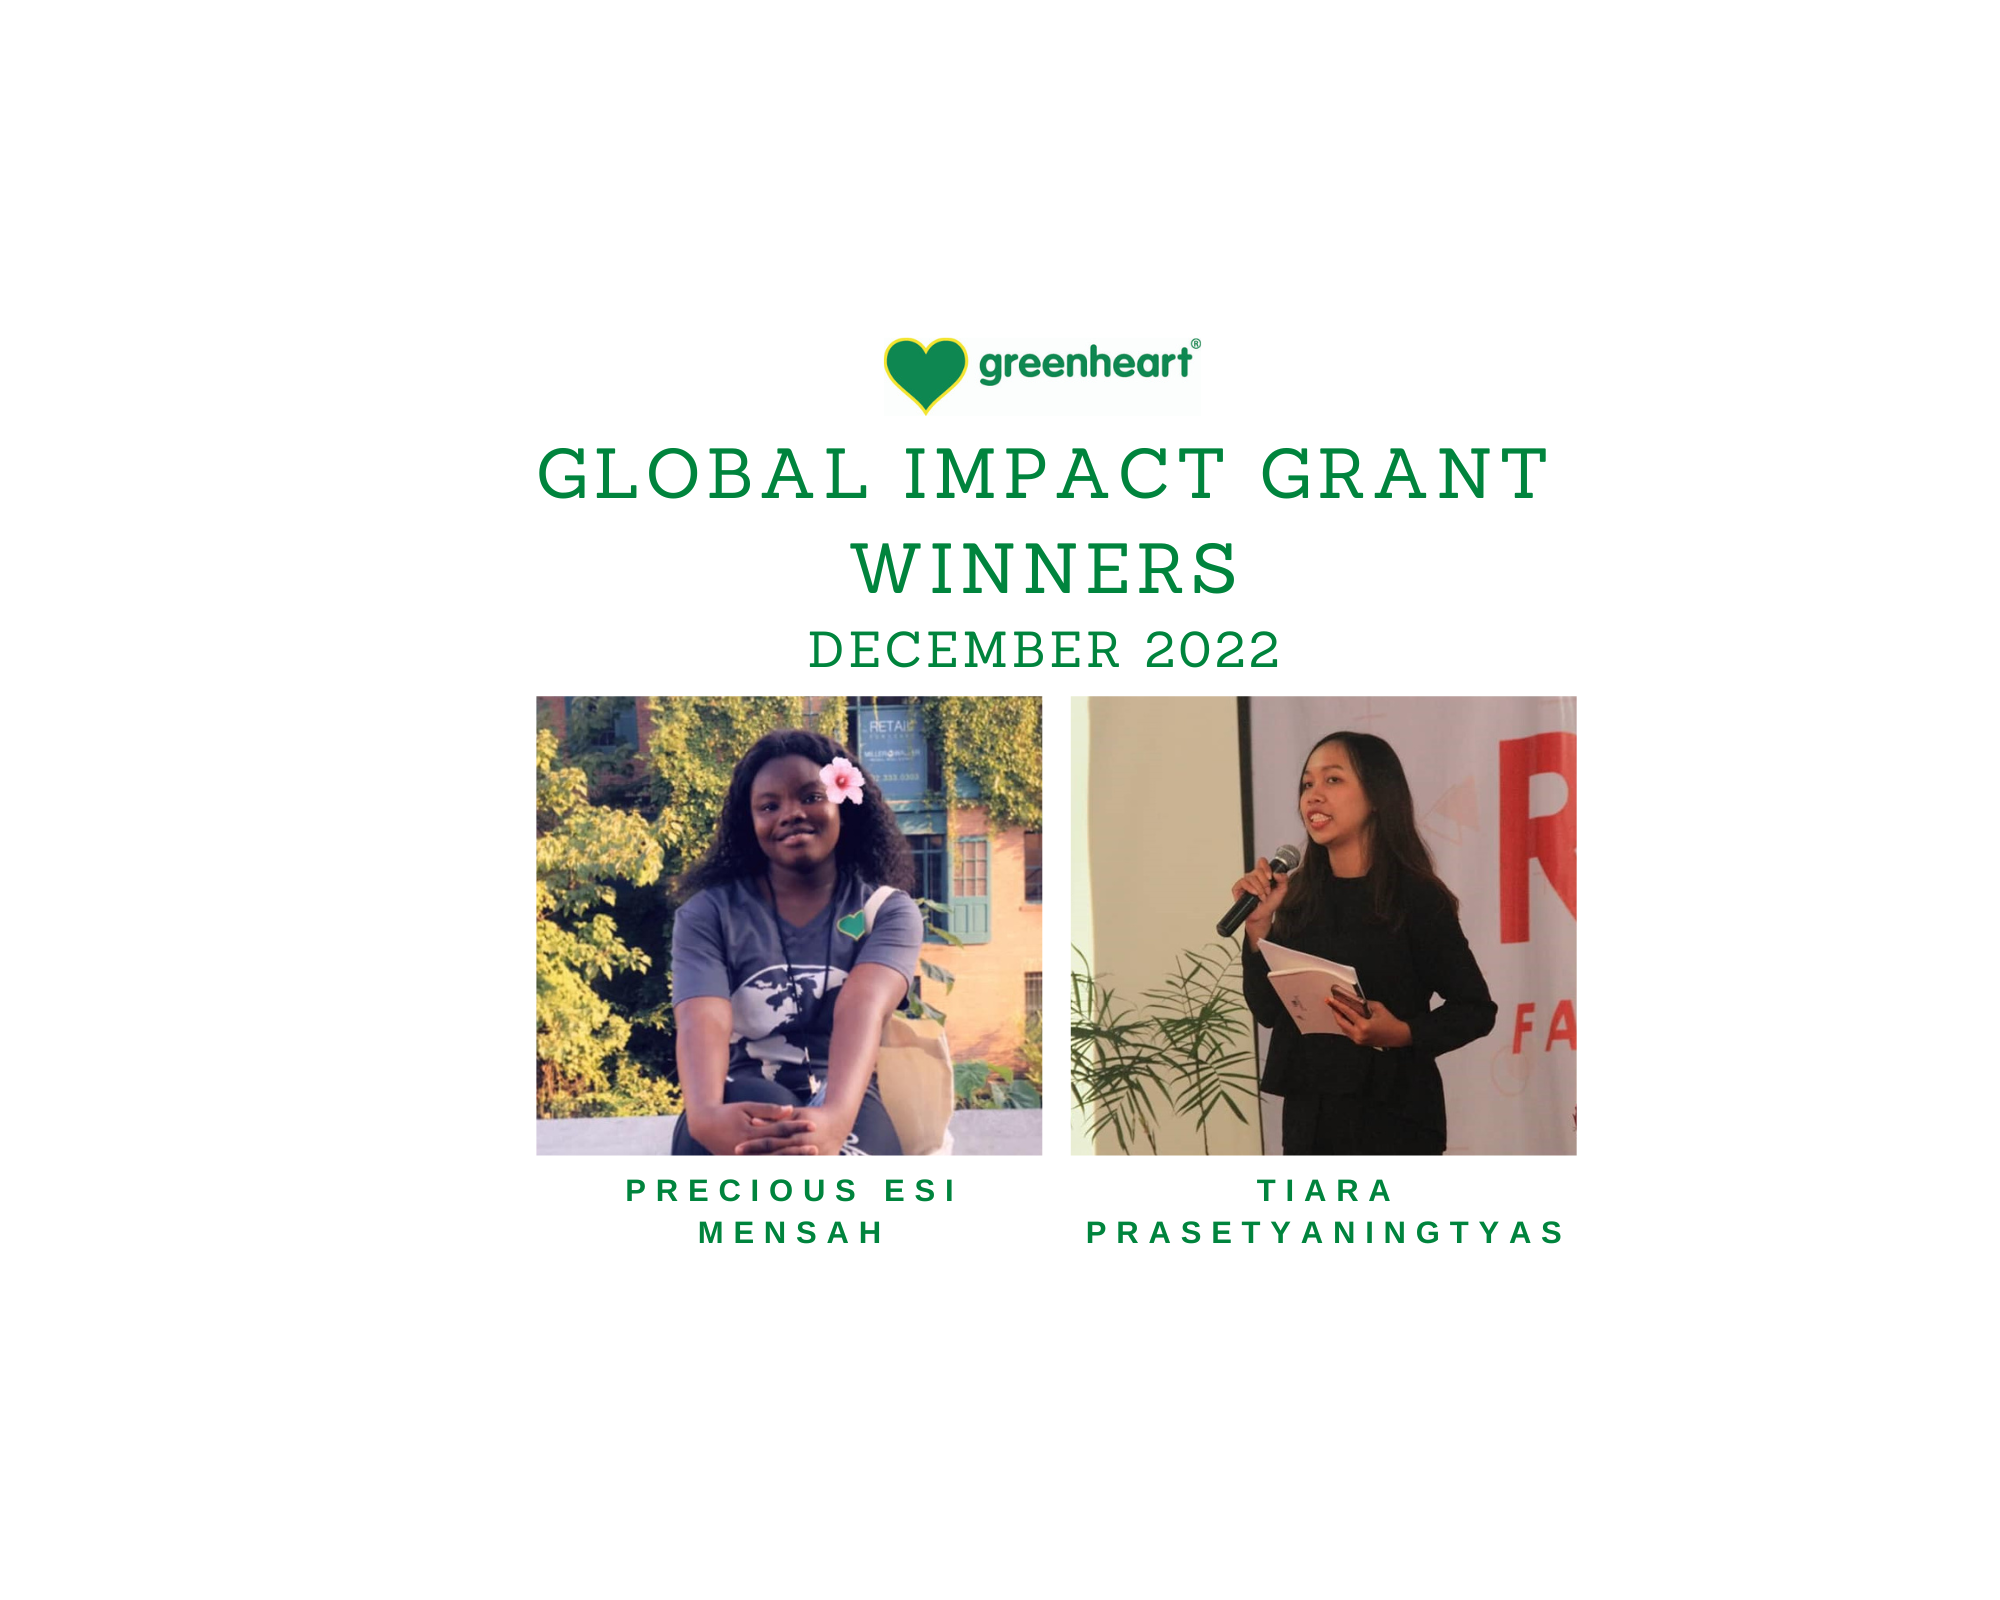 Greenheart’s Global Impact Grant – December 2022 Winners!